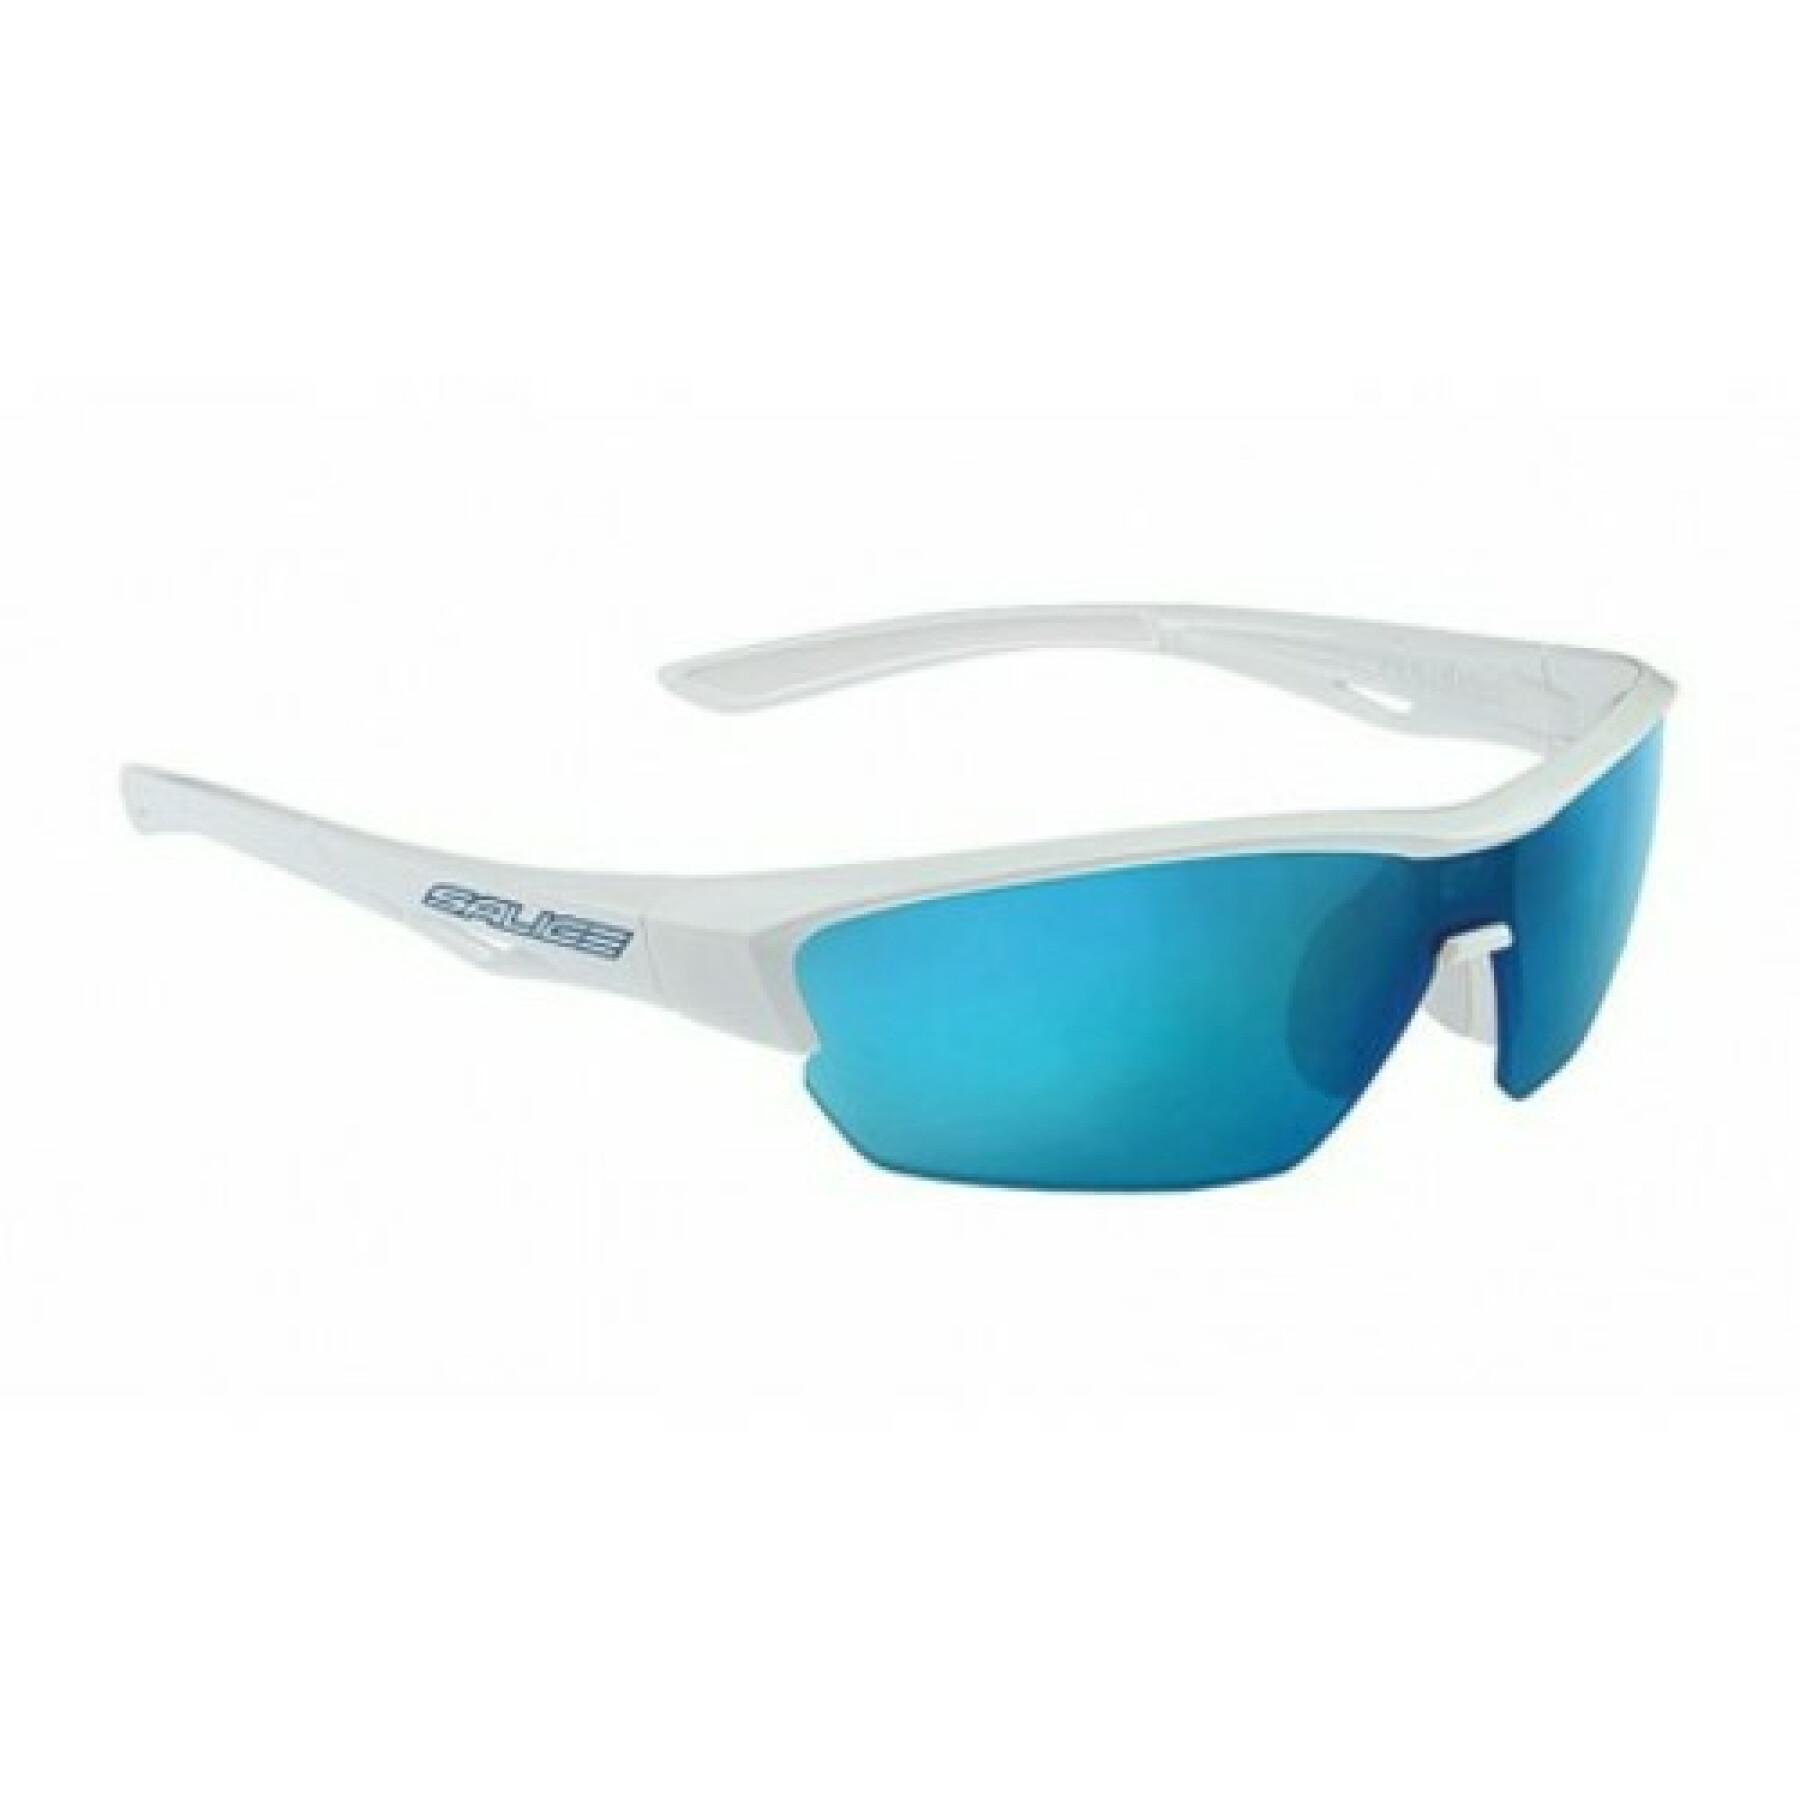 Photocromatic sunglasses Salice 011 RWX